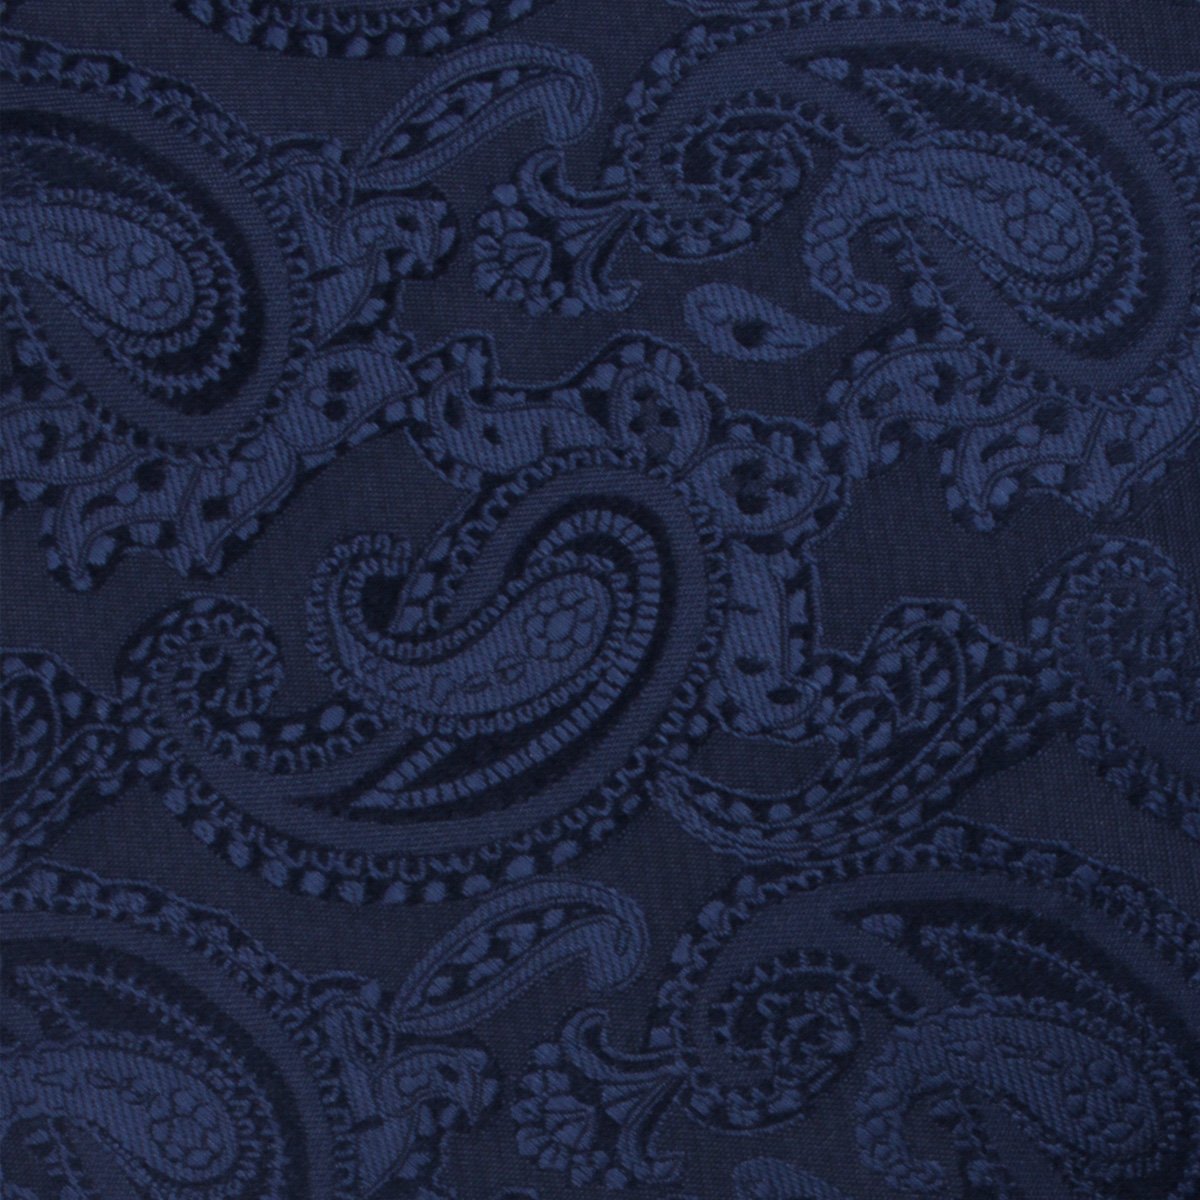 Midnight Navy Paisley Necktie Fabric